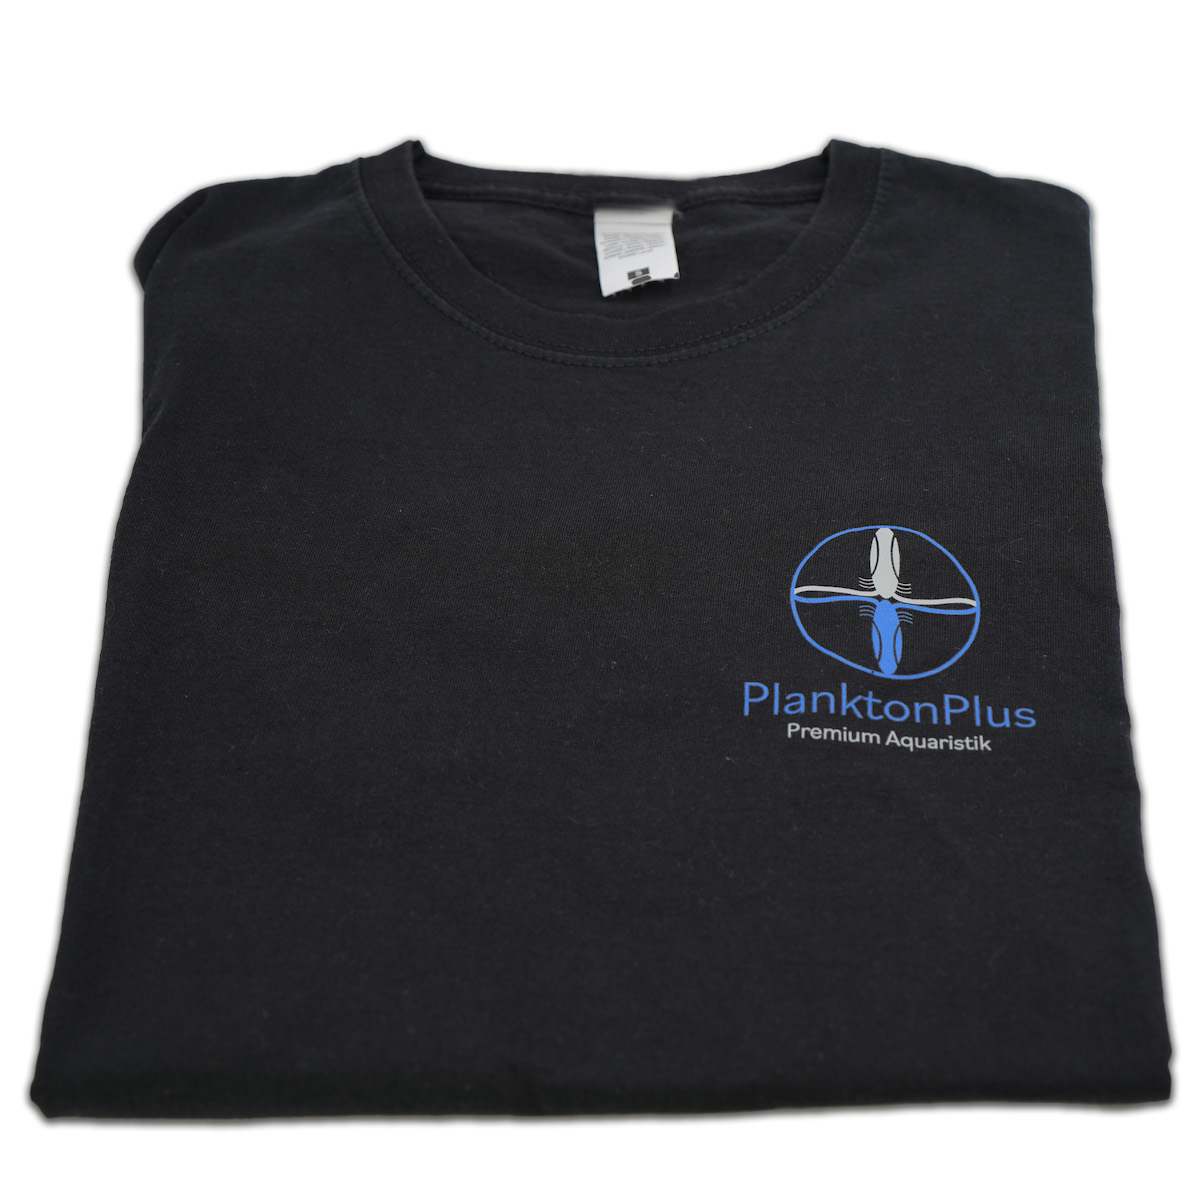 PlanktonPlus Aquaristik T-Shirt Basic schwarz - Größe L